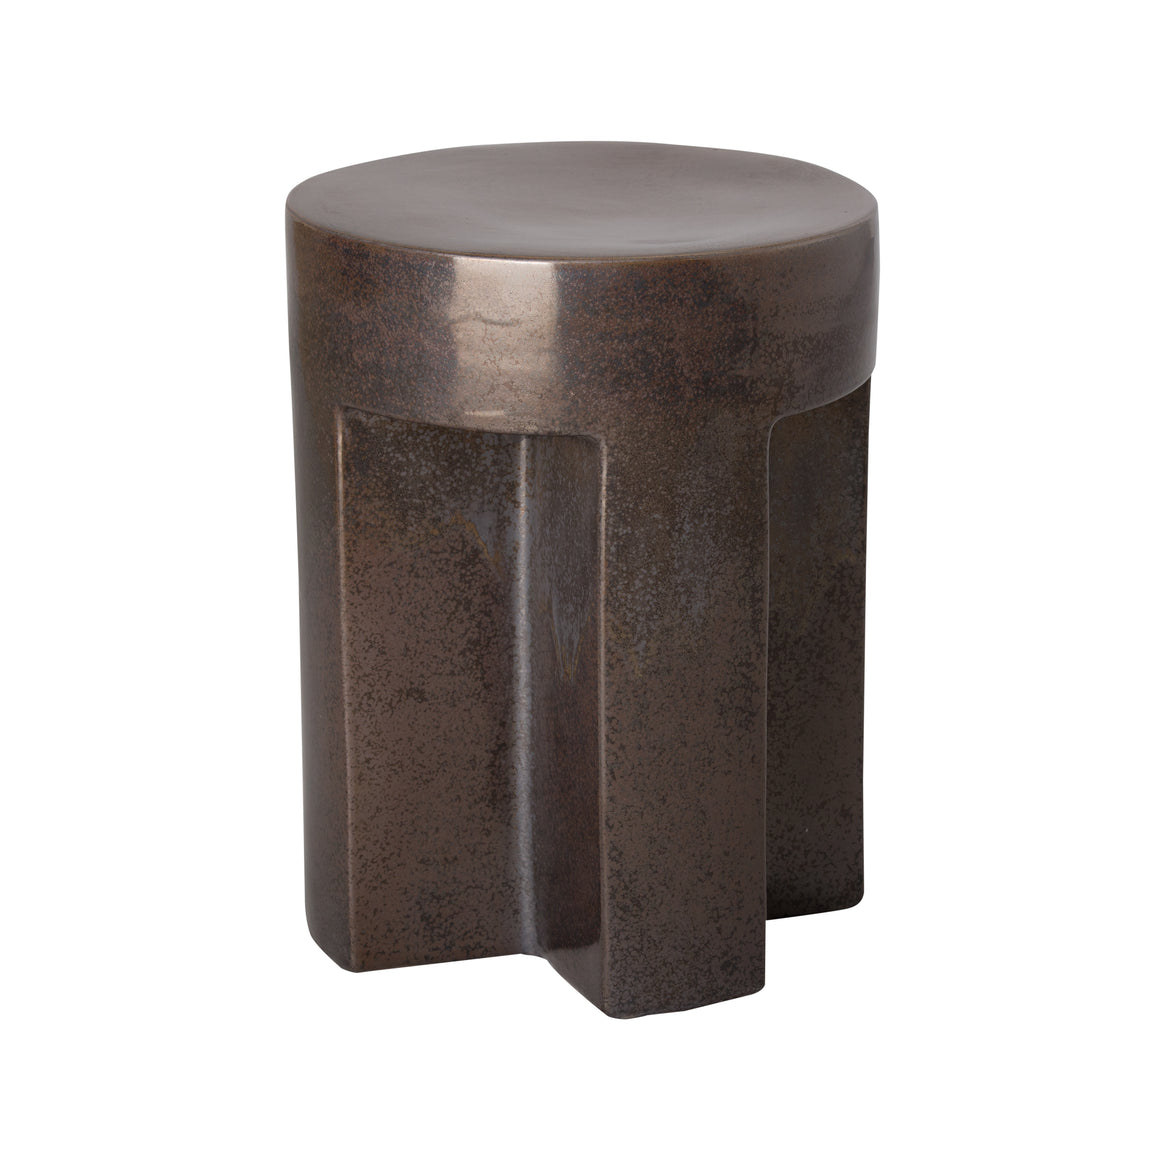 Ceramic Garden Stool/Table with a Gunmetal Glaze